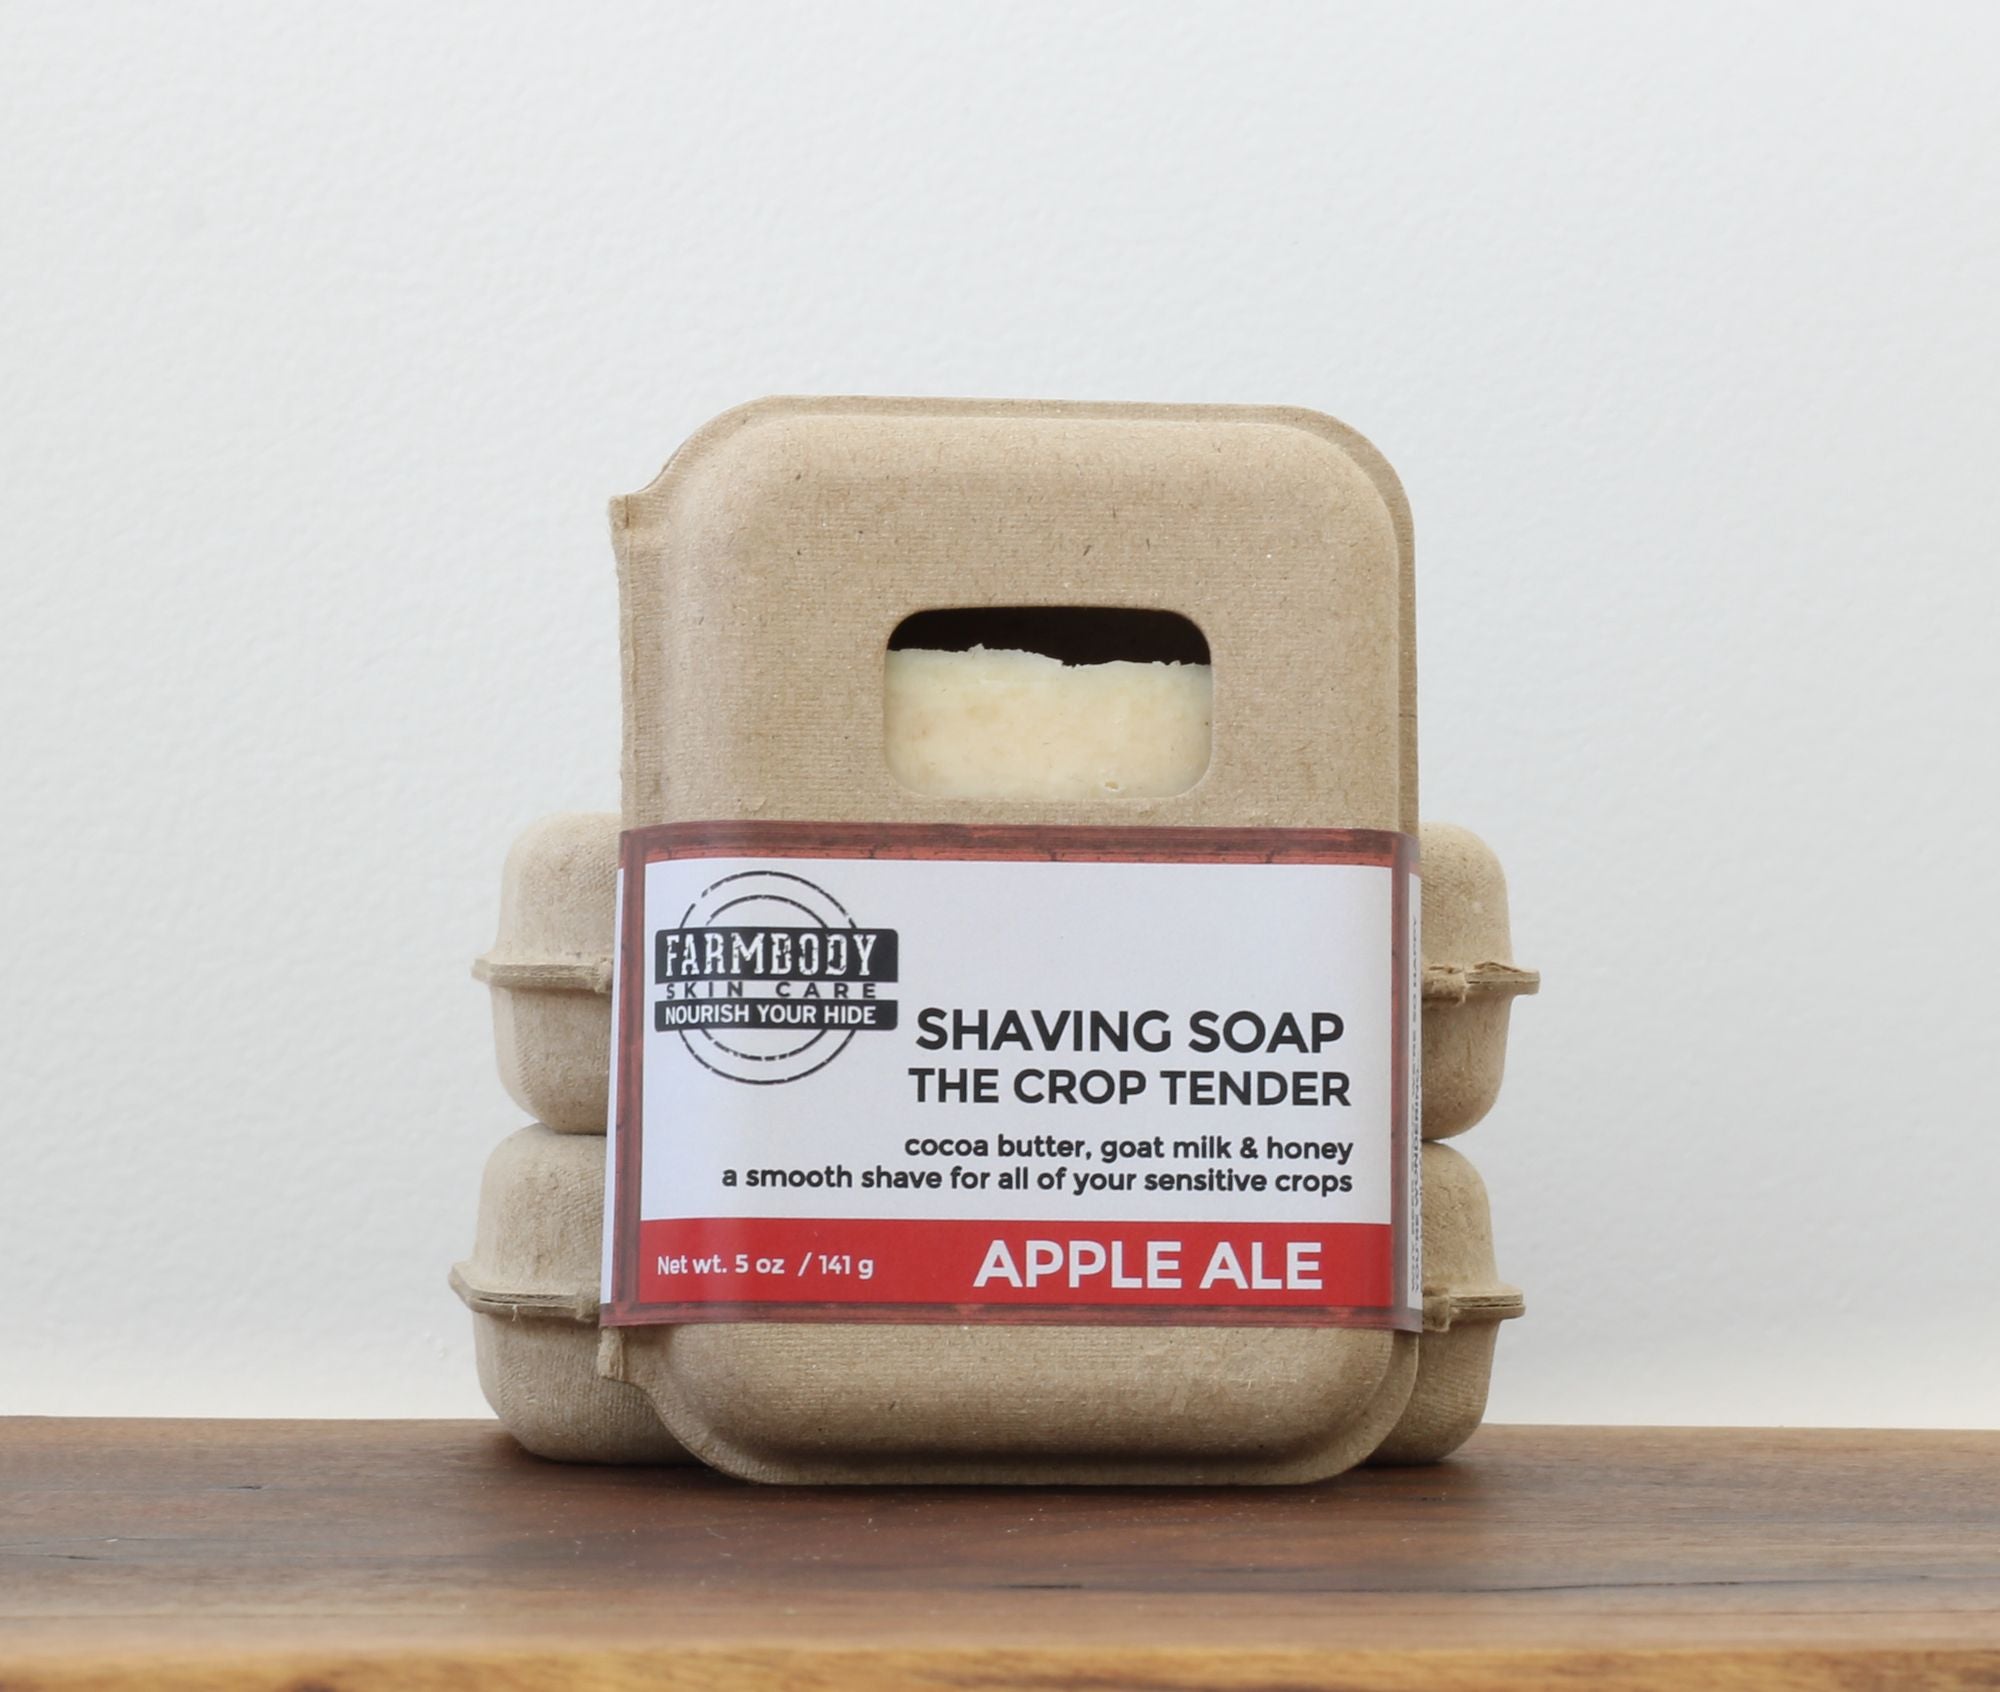 Shaving Soap for Sensitive Skin |The Crop Tender | Beer Shaving Soap